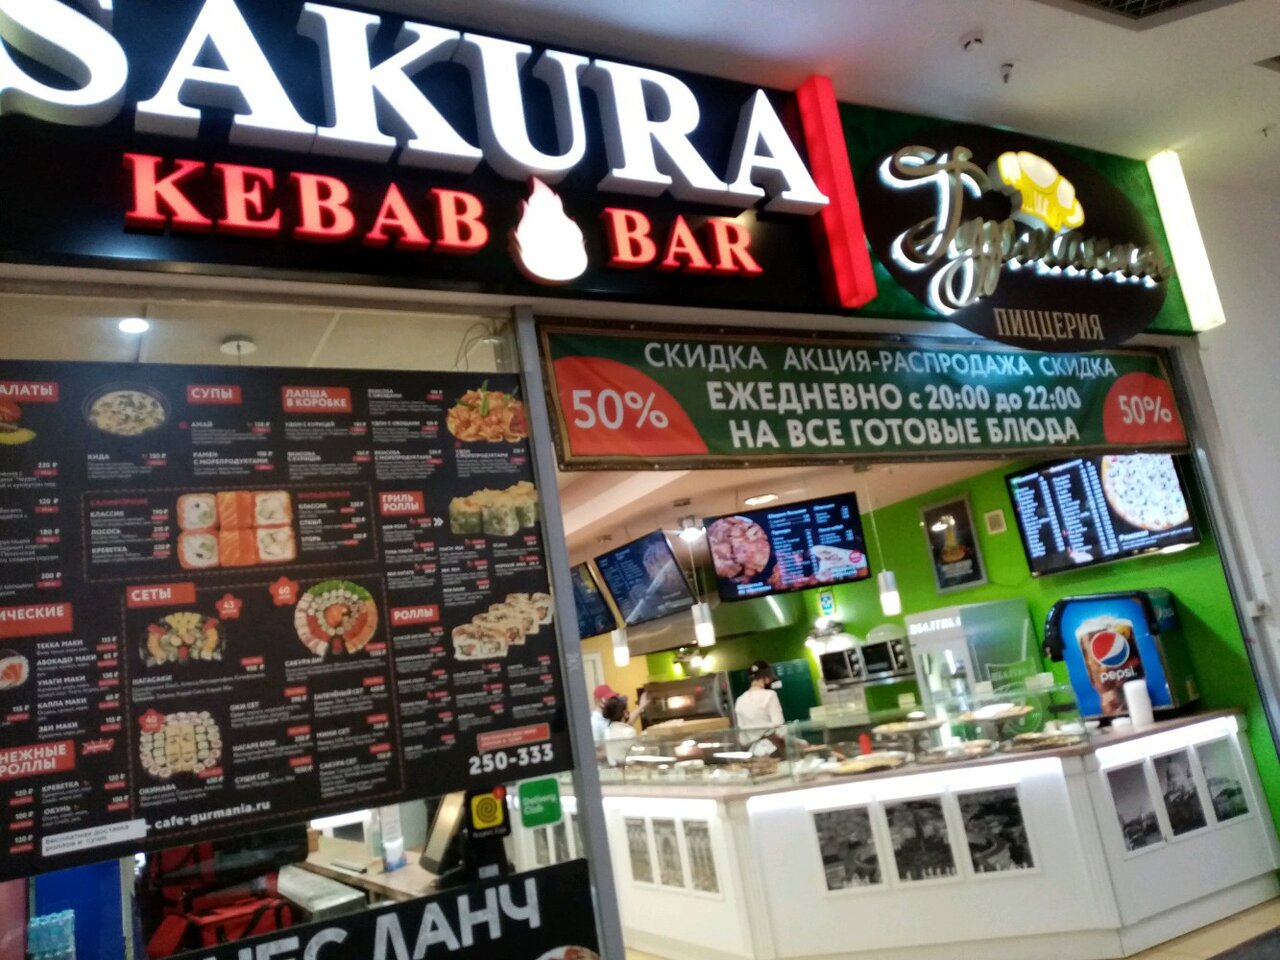 Сакура суши бар отзывы фото 12